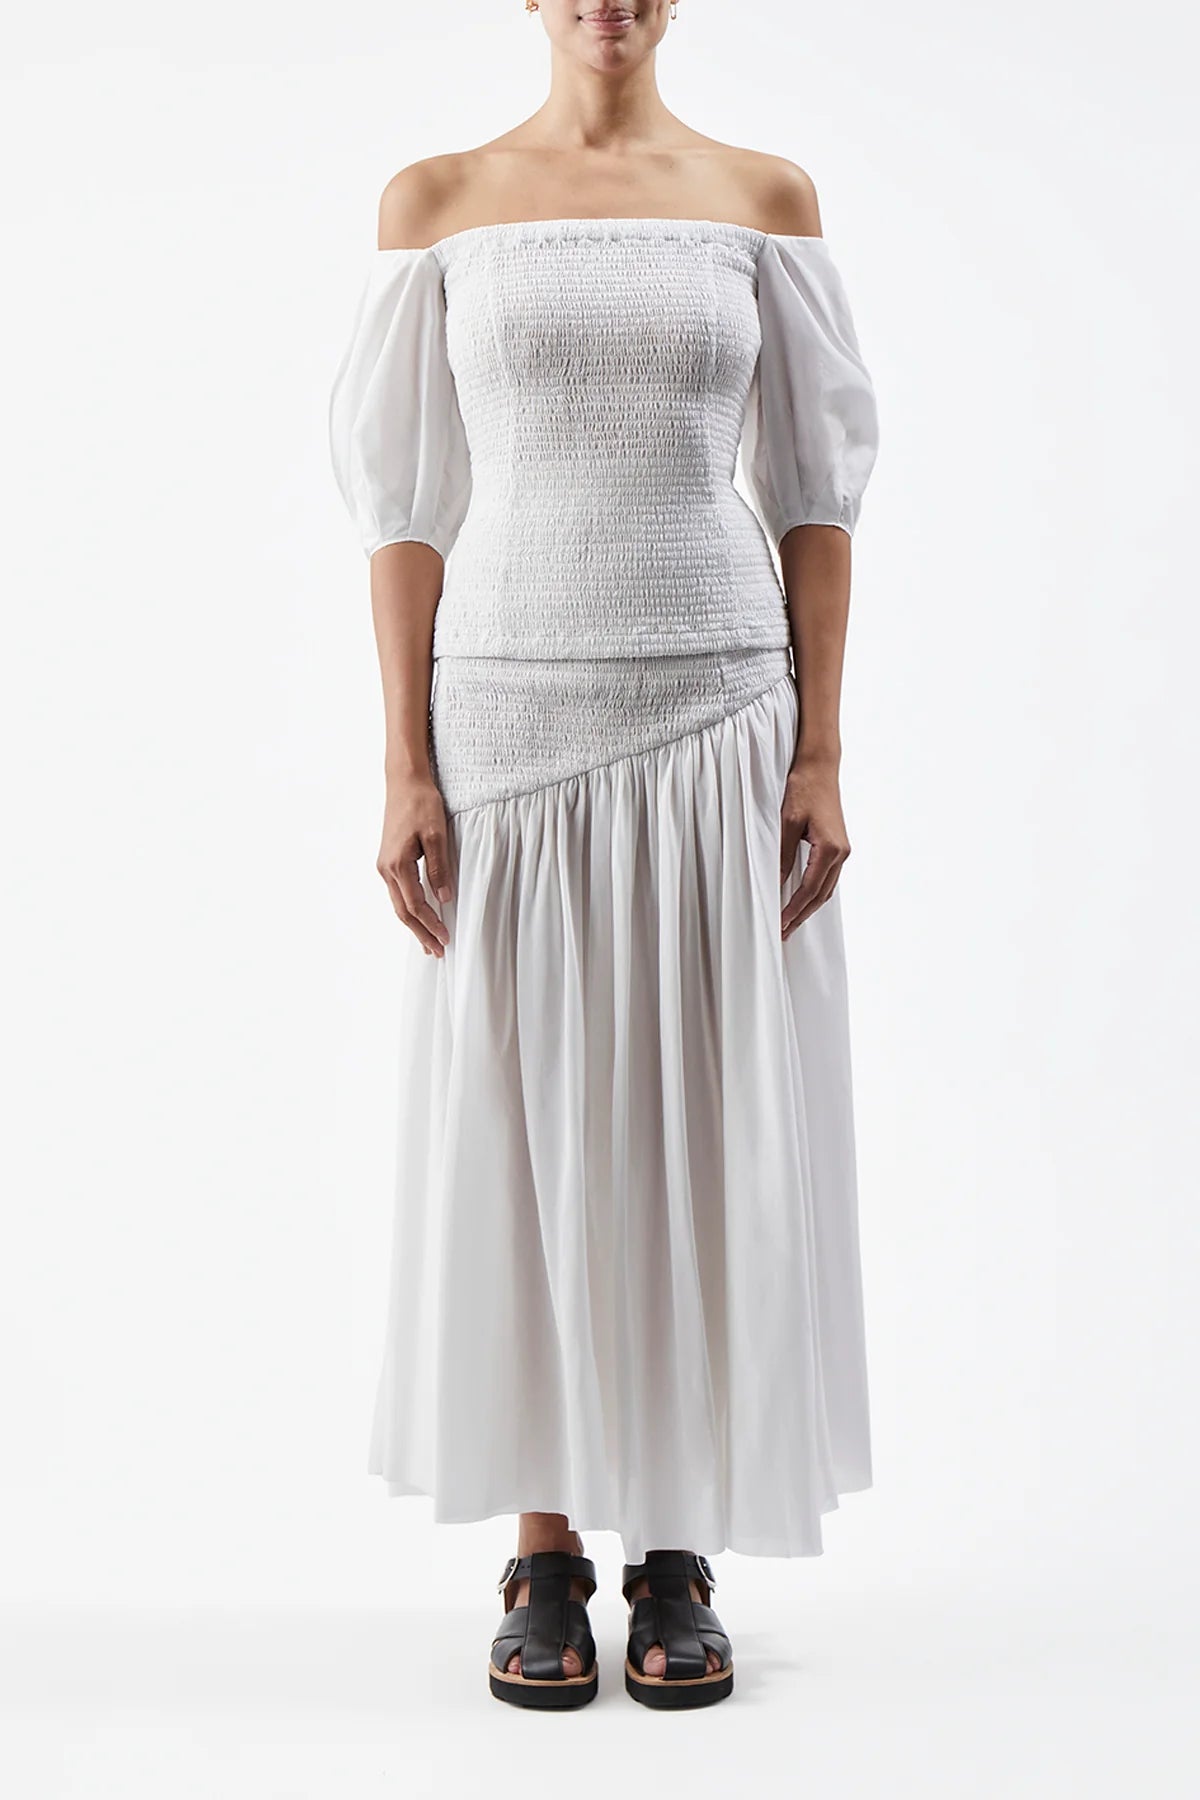 Gabriela-Hearst-Lyre-blouse-white-amarees